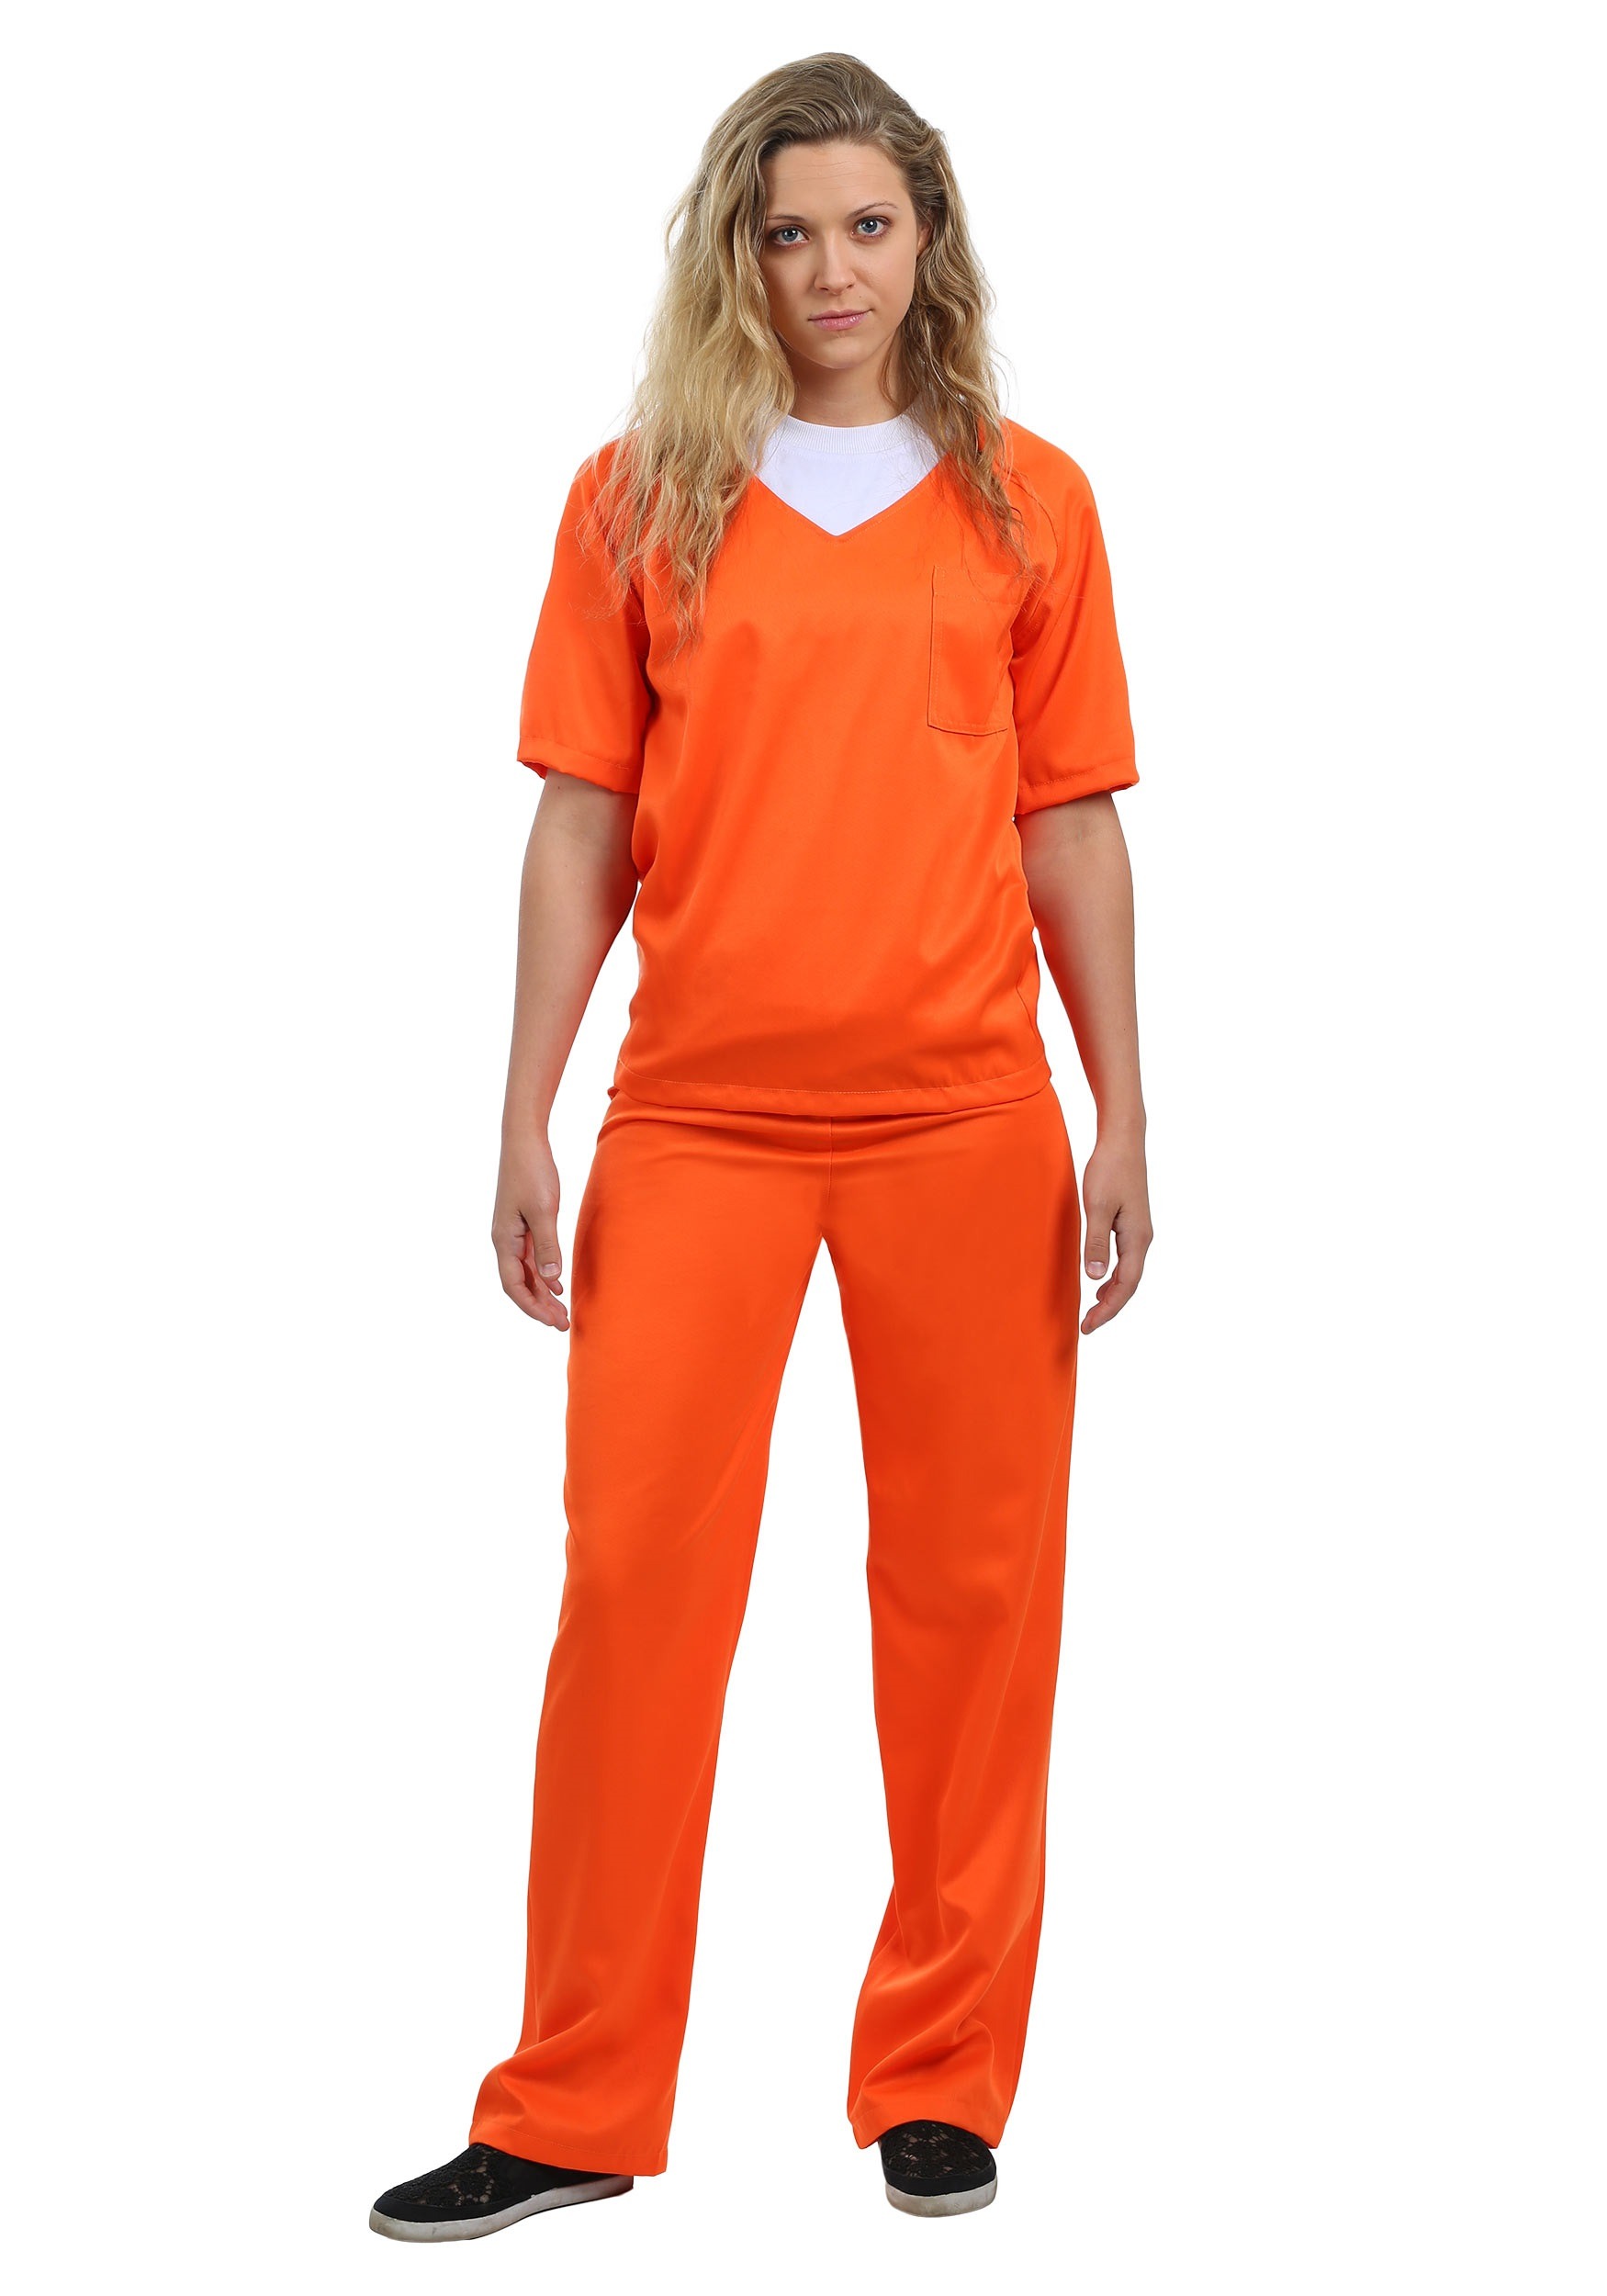 Orange Prisoner Fancy Dress Costume